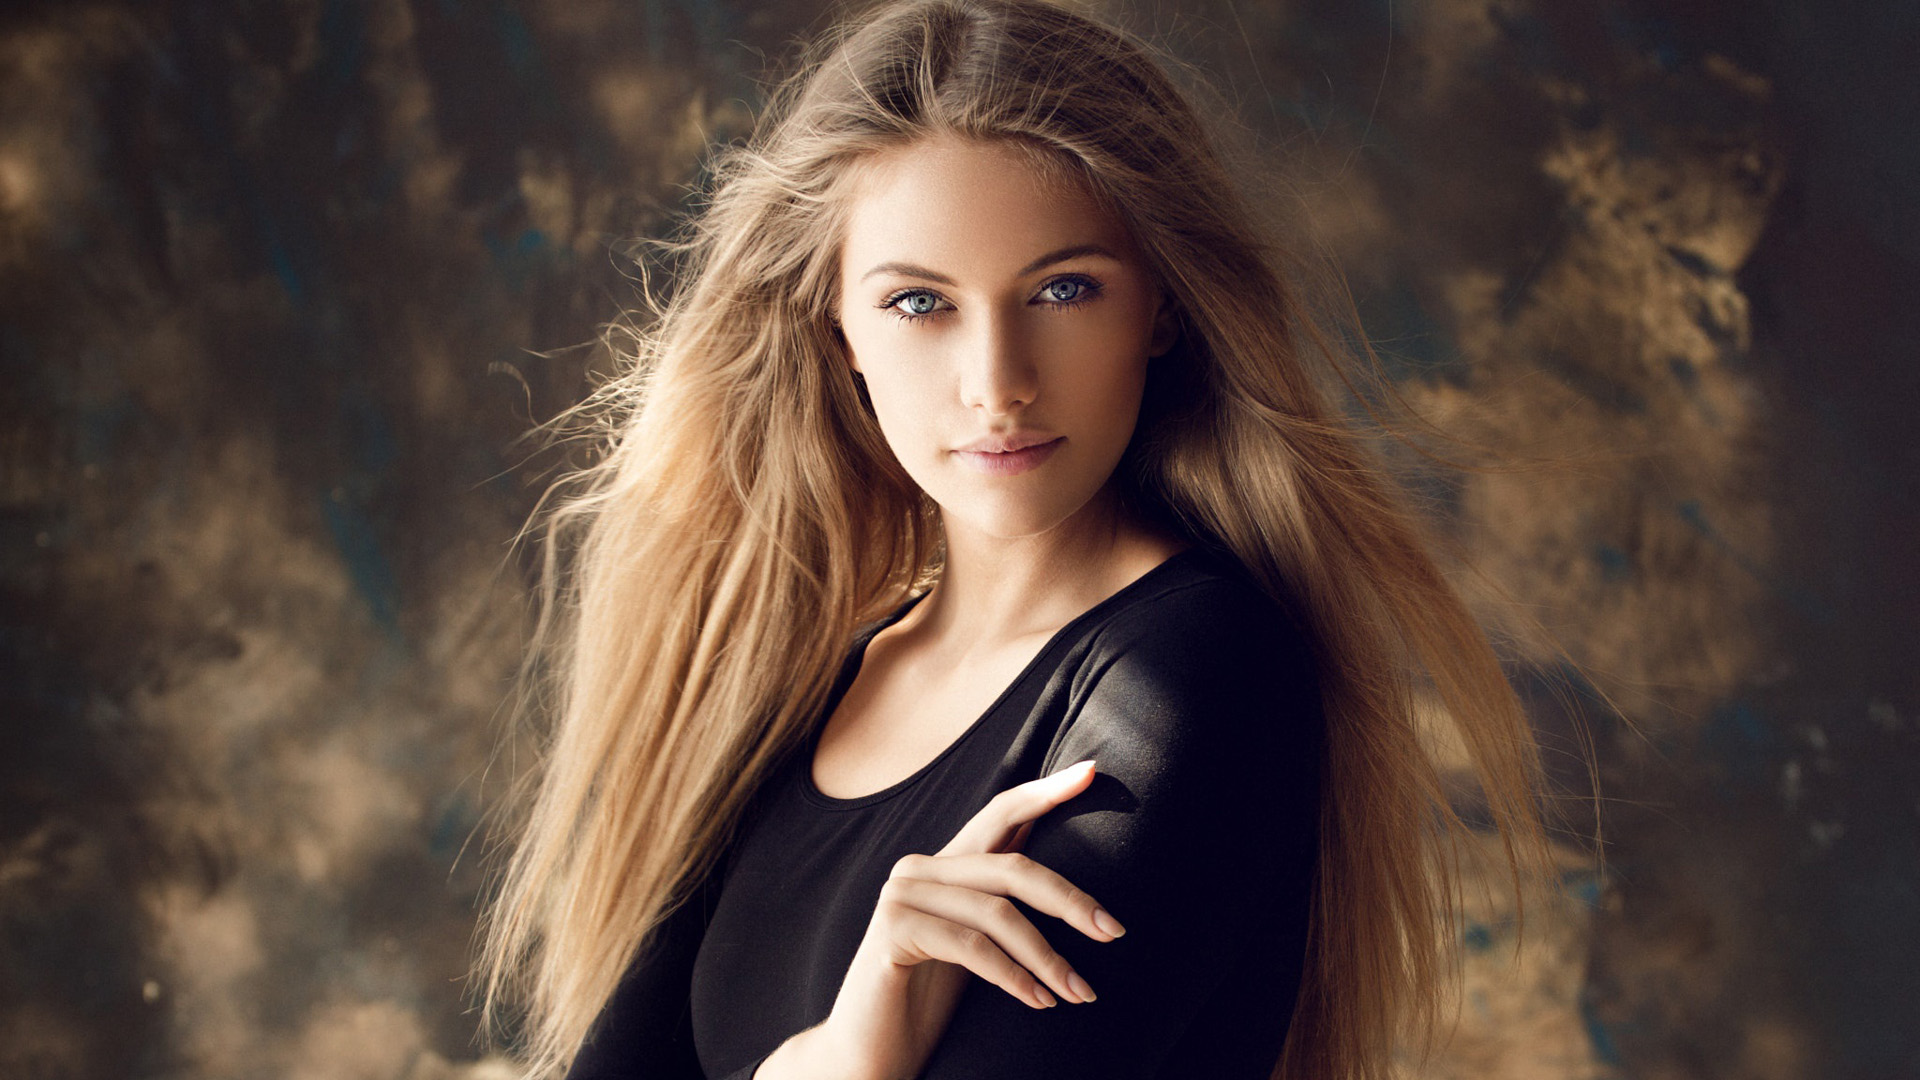 Blonde Girl Model With Blue Eyes Is Standing In Blur Wallpaper Wearing Black Dress 2K Girls